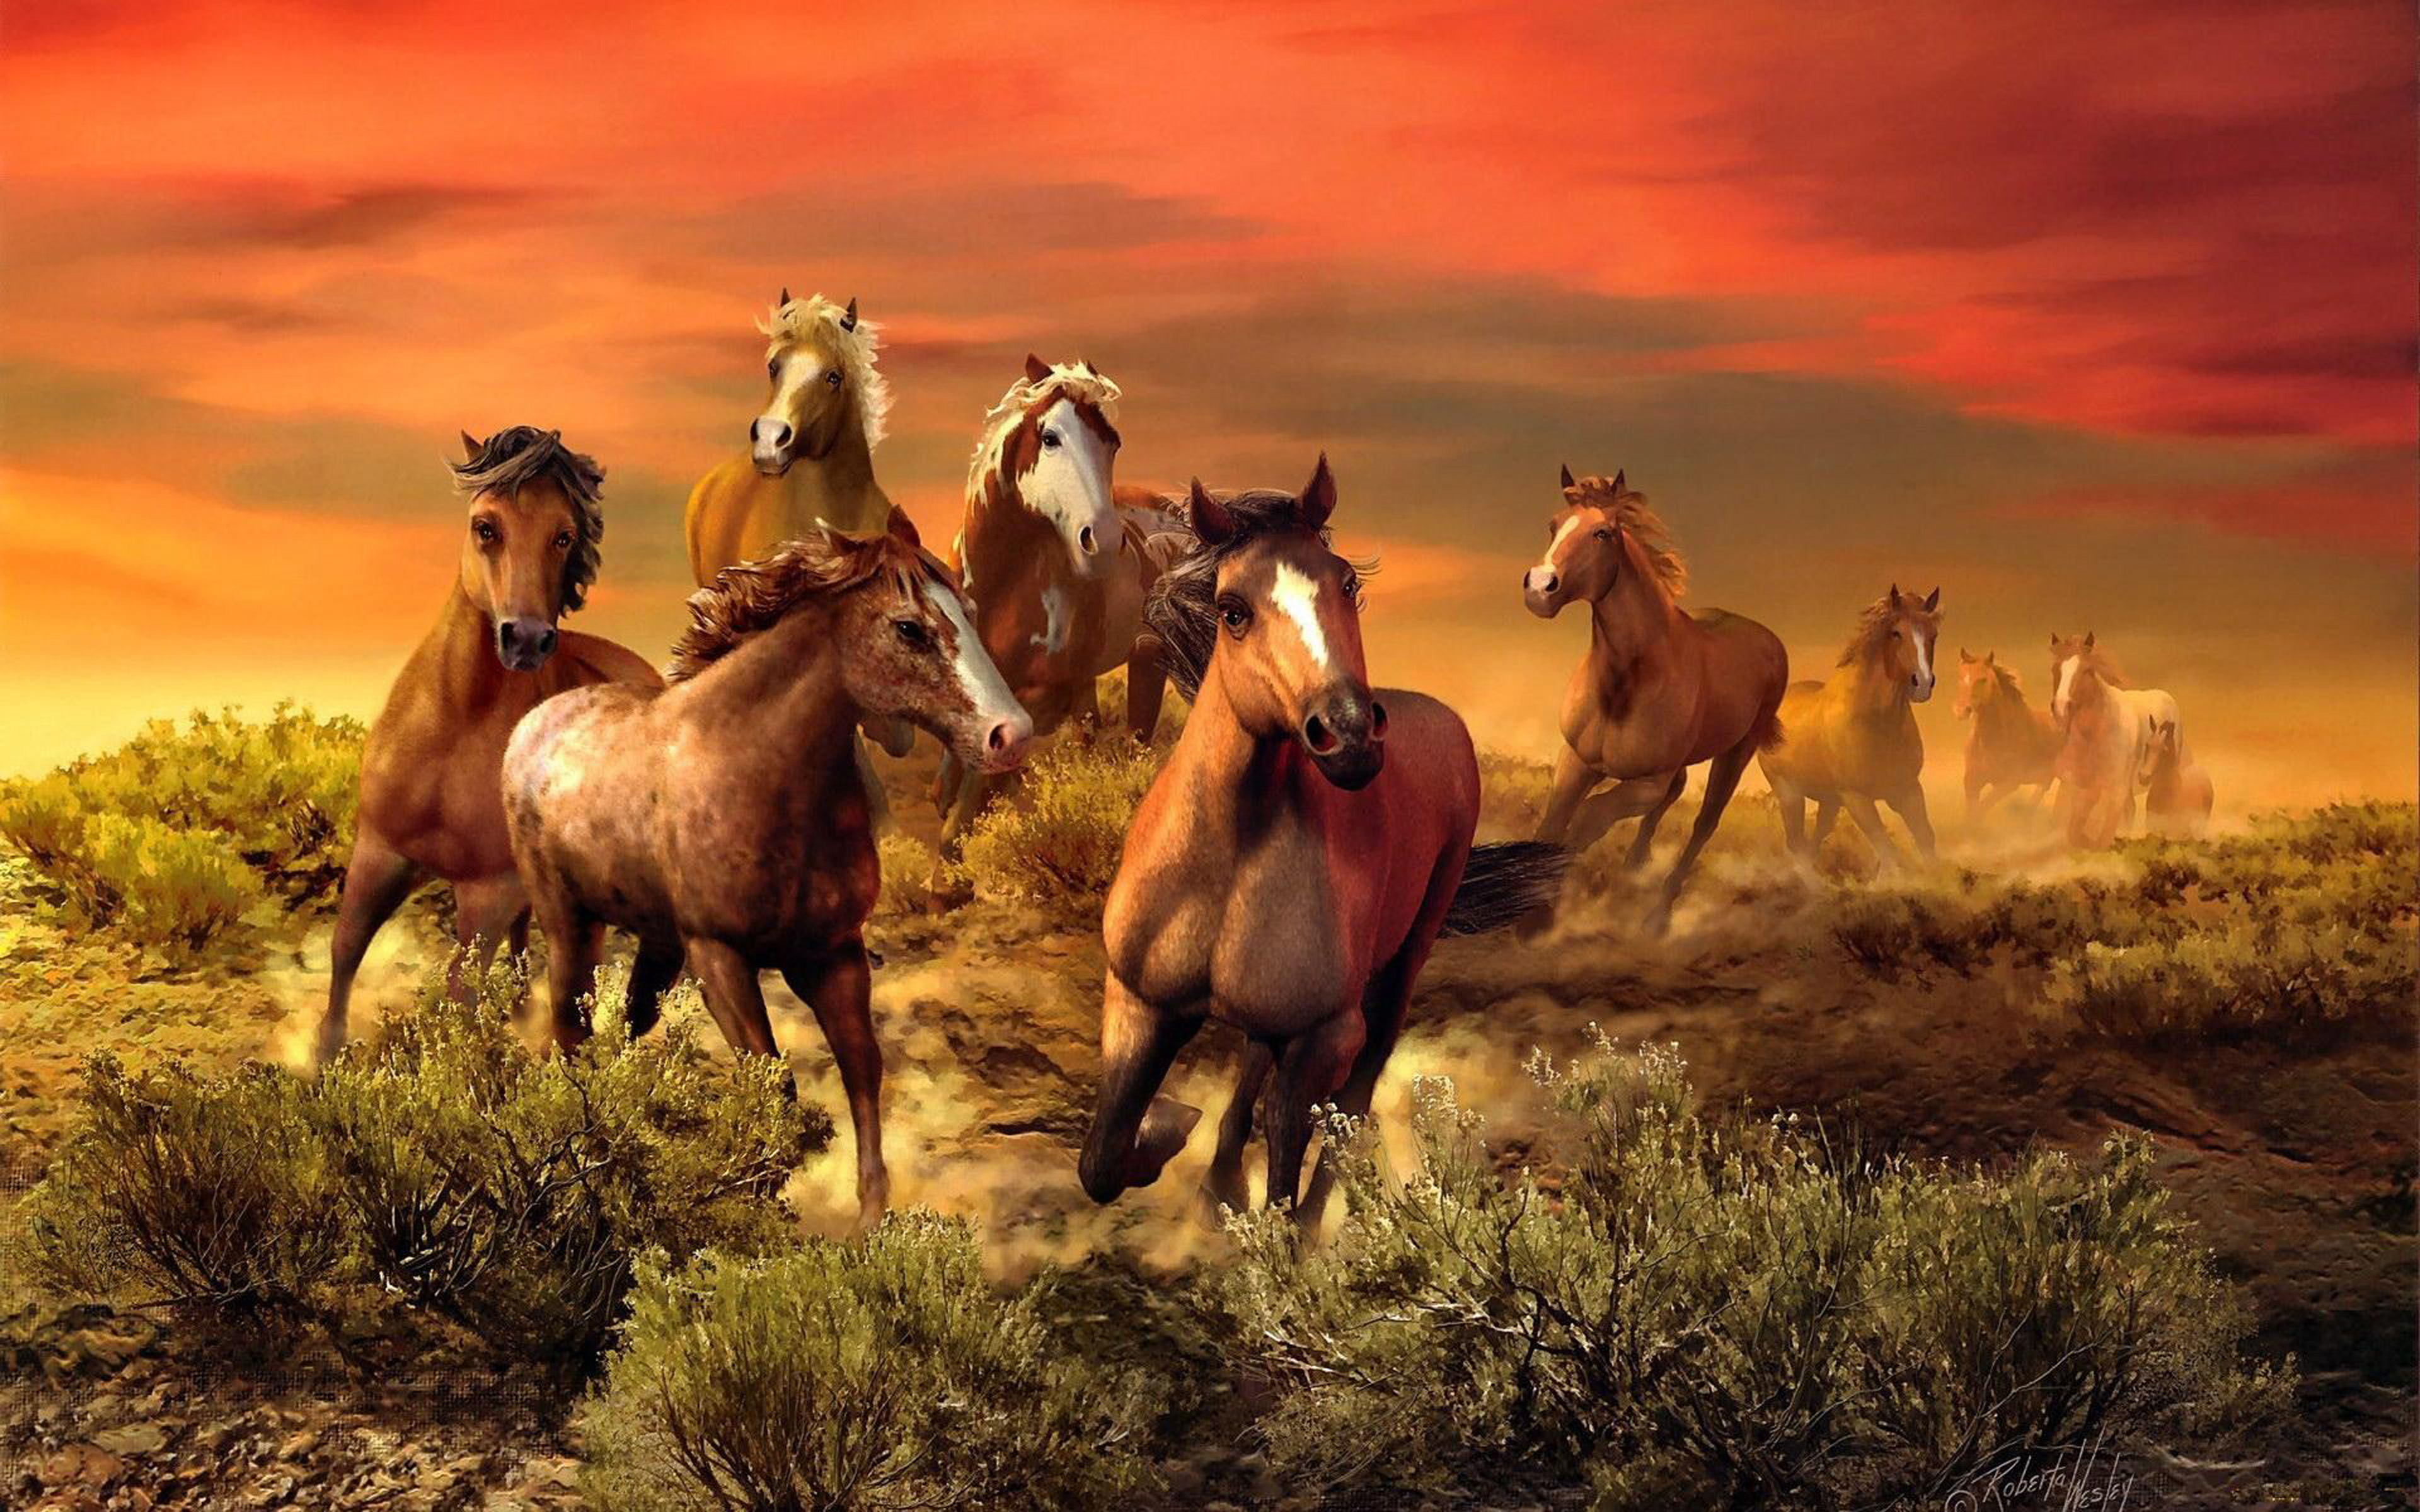 Wild Horses Field Bush Fire Red Sky Wallpaper Hd : Wallpapers13.com